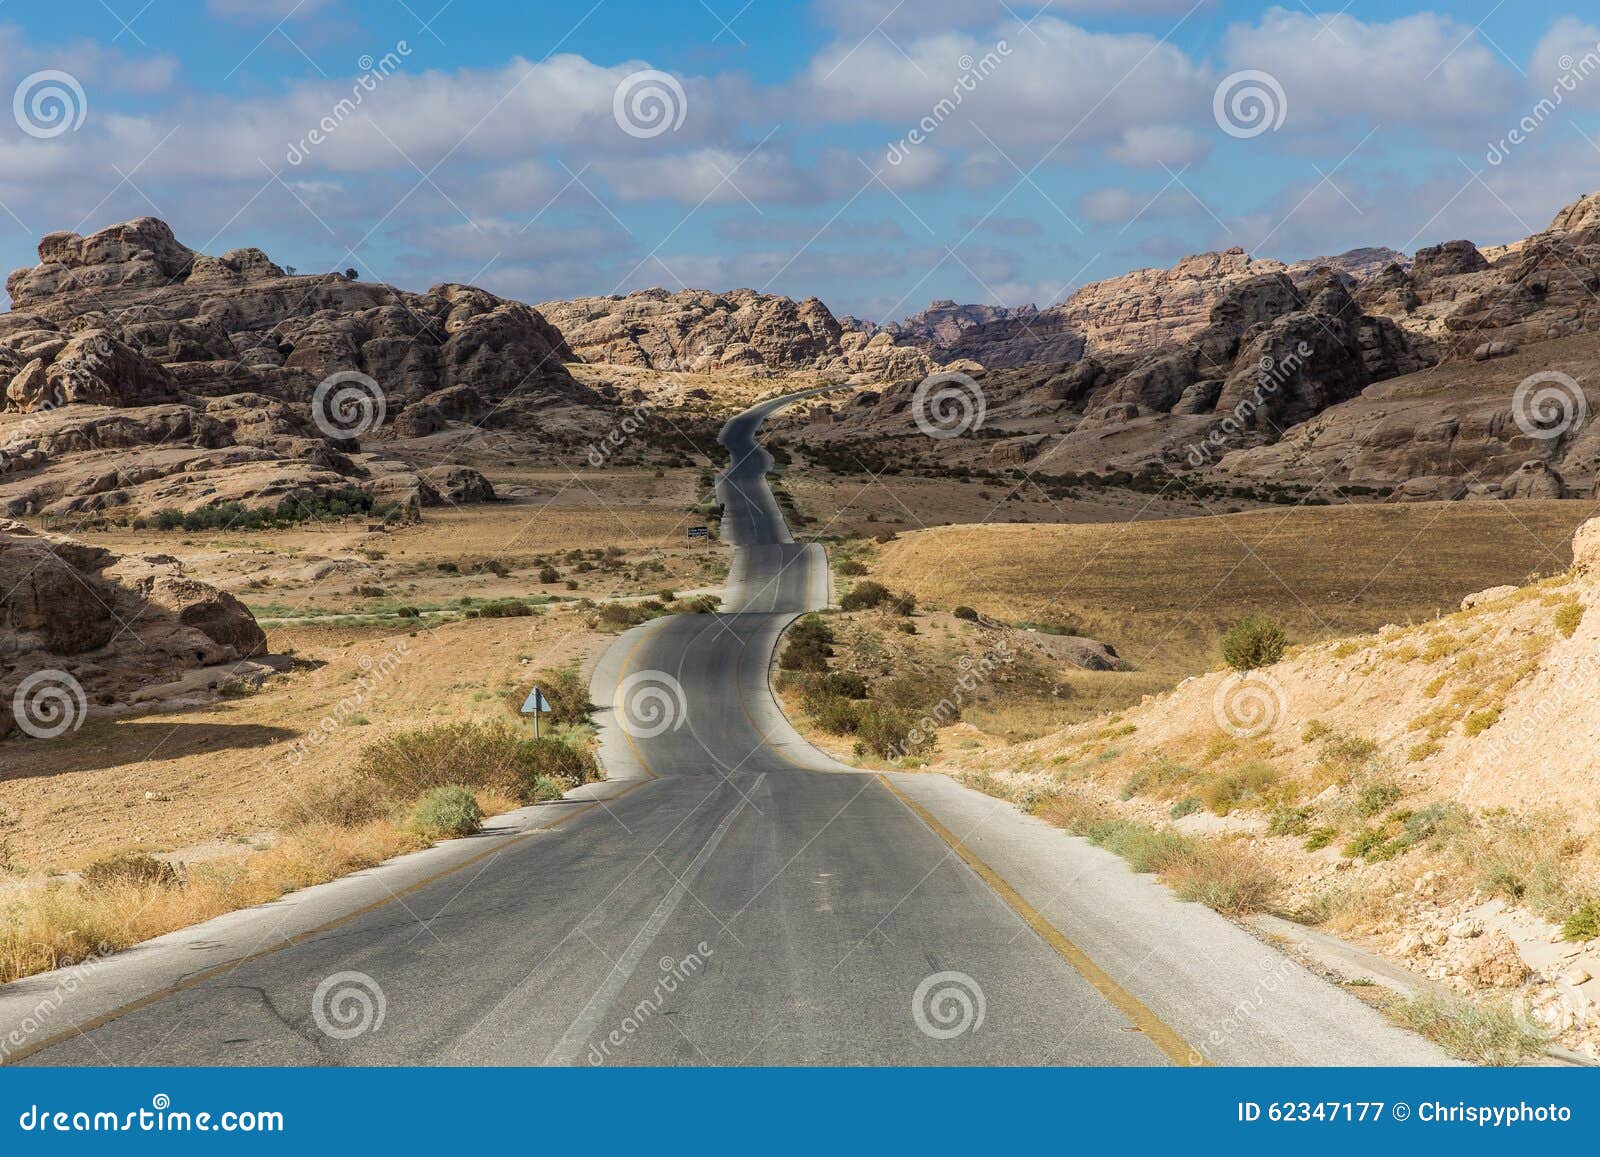 mountainous curvy roads in jordan